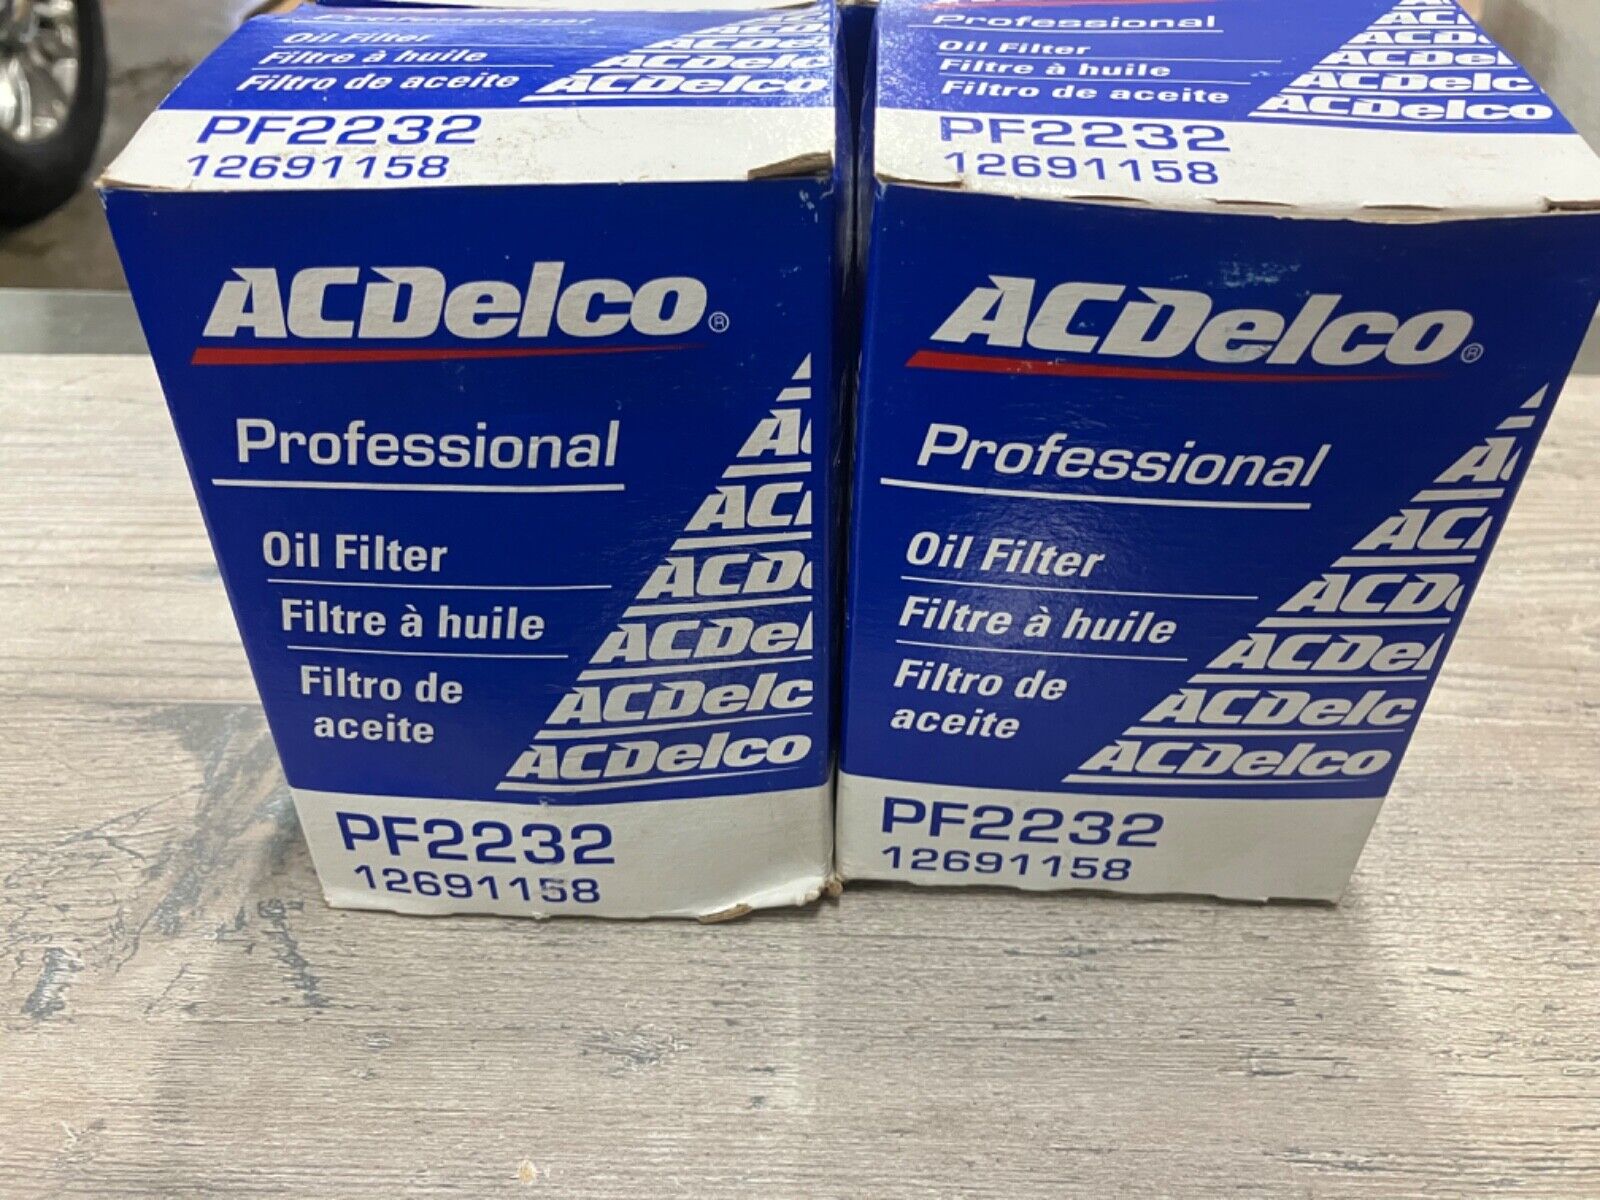 AC Delco PF 2232 Chevy Duramax oil filters